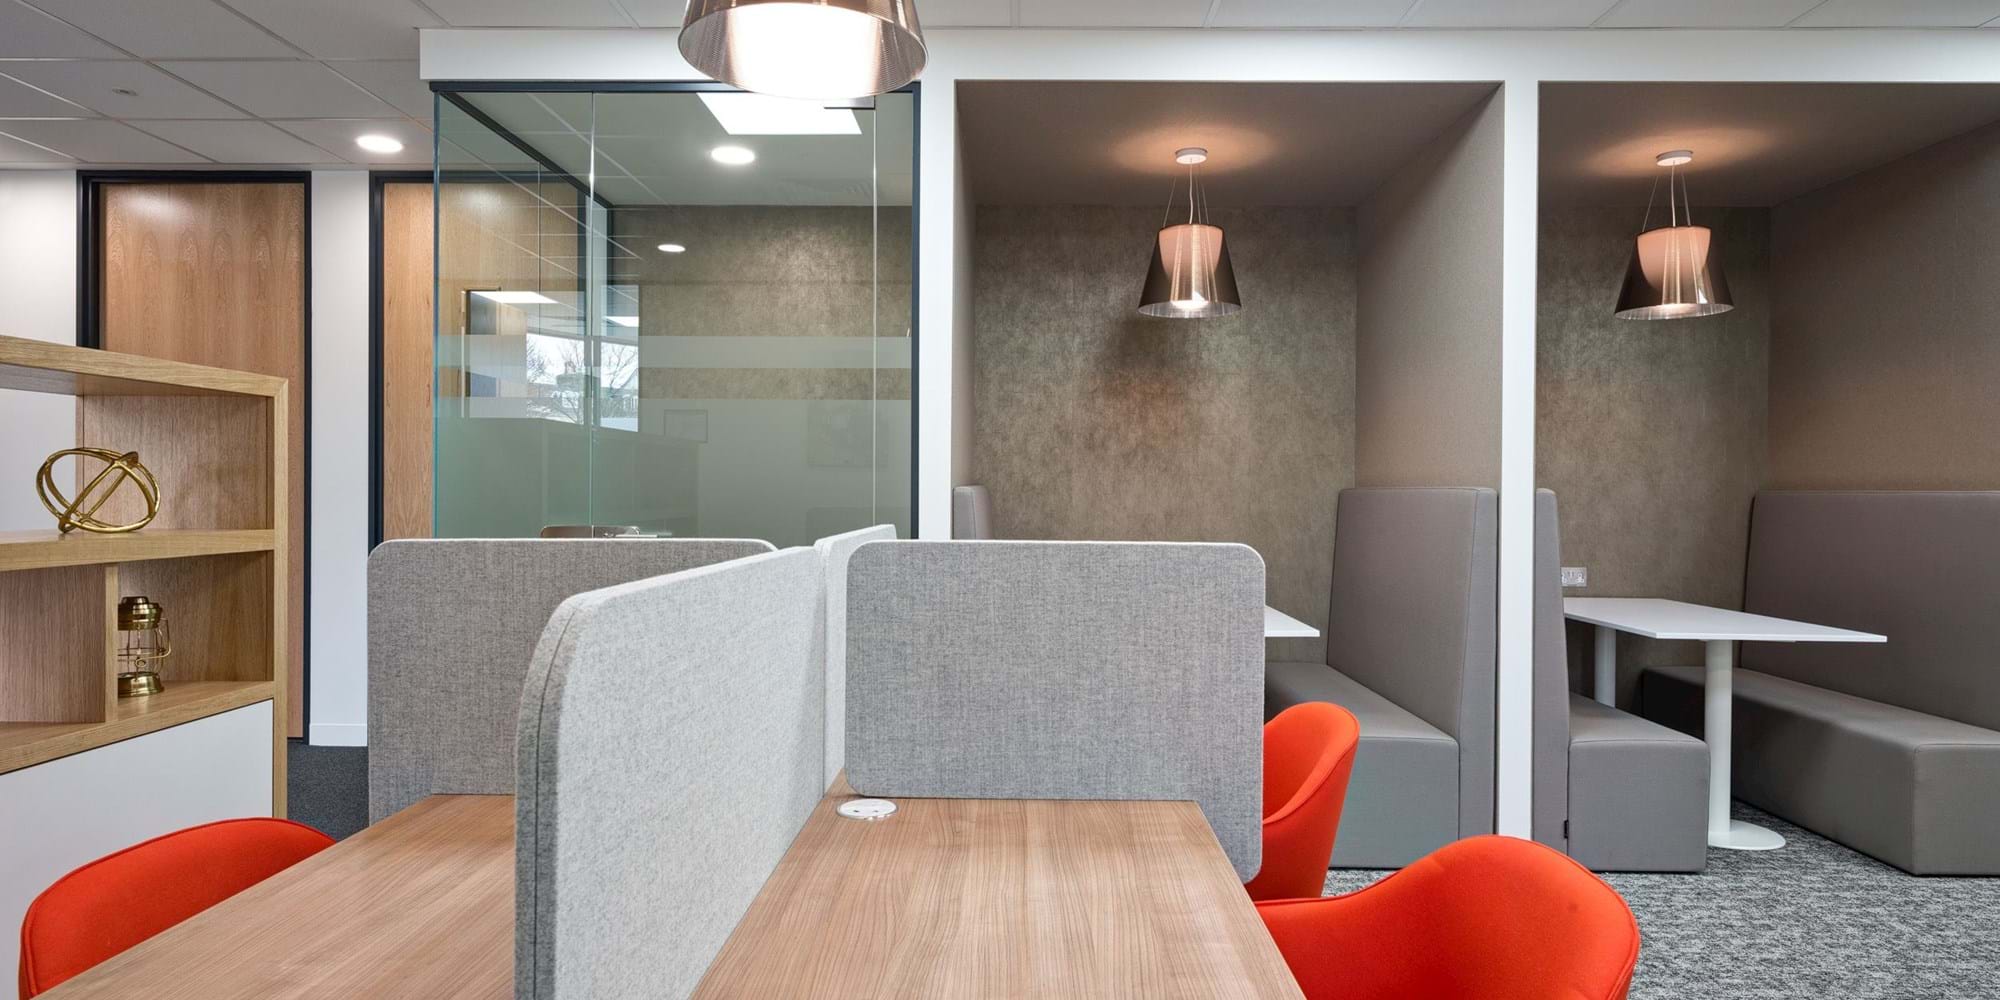 Modus Workspace office design, fit out and refurbishment - Regus Ashford - Regus Ashford 07 highres sRGB.jpg